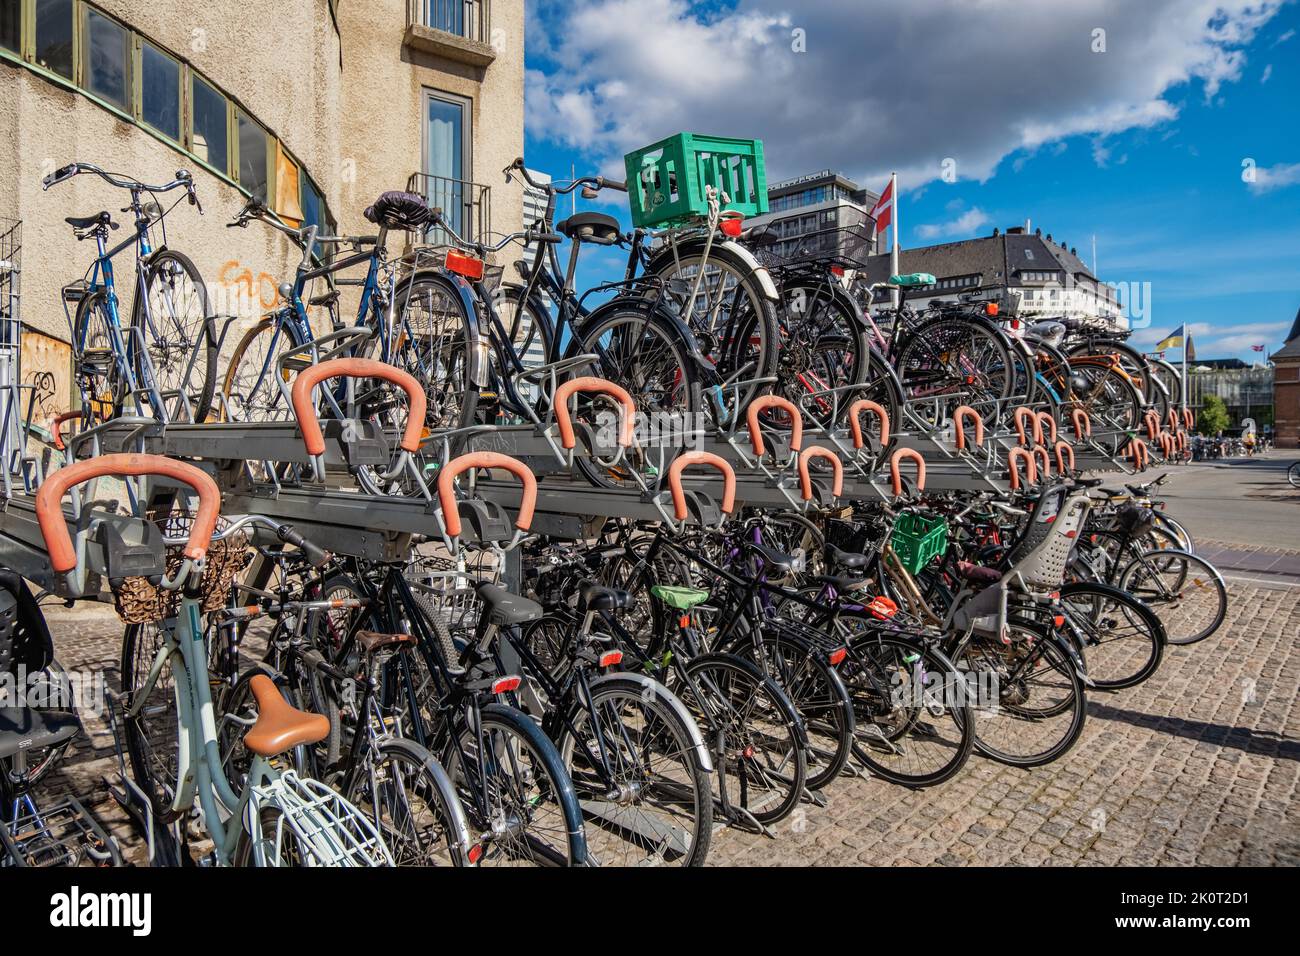 Bicycle parking in central Copenhagen, Denmark Stock Photo